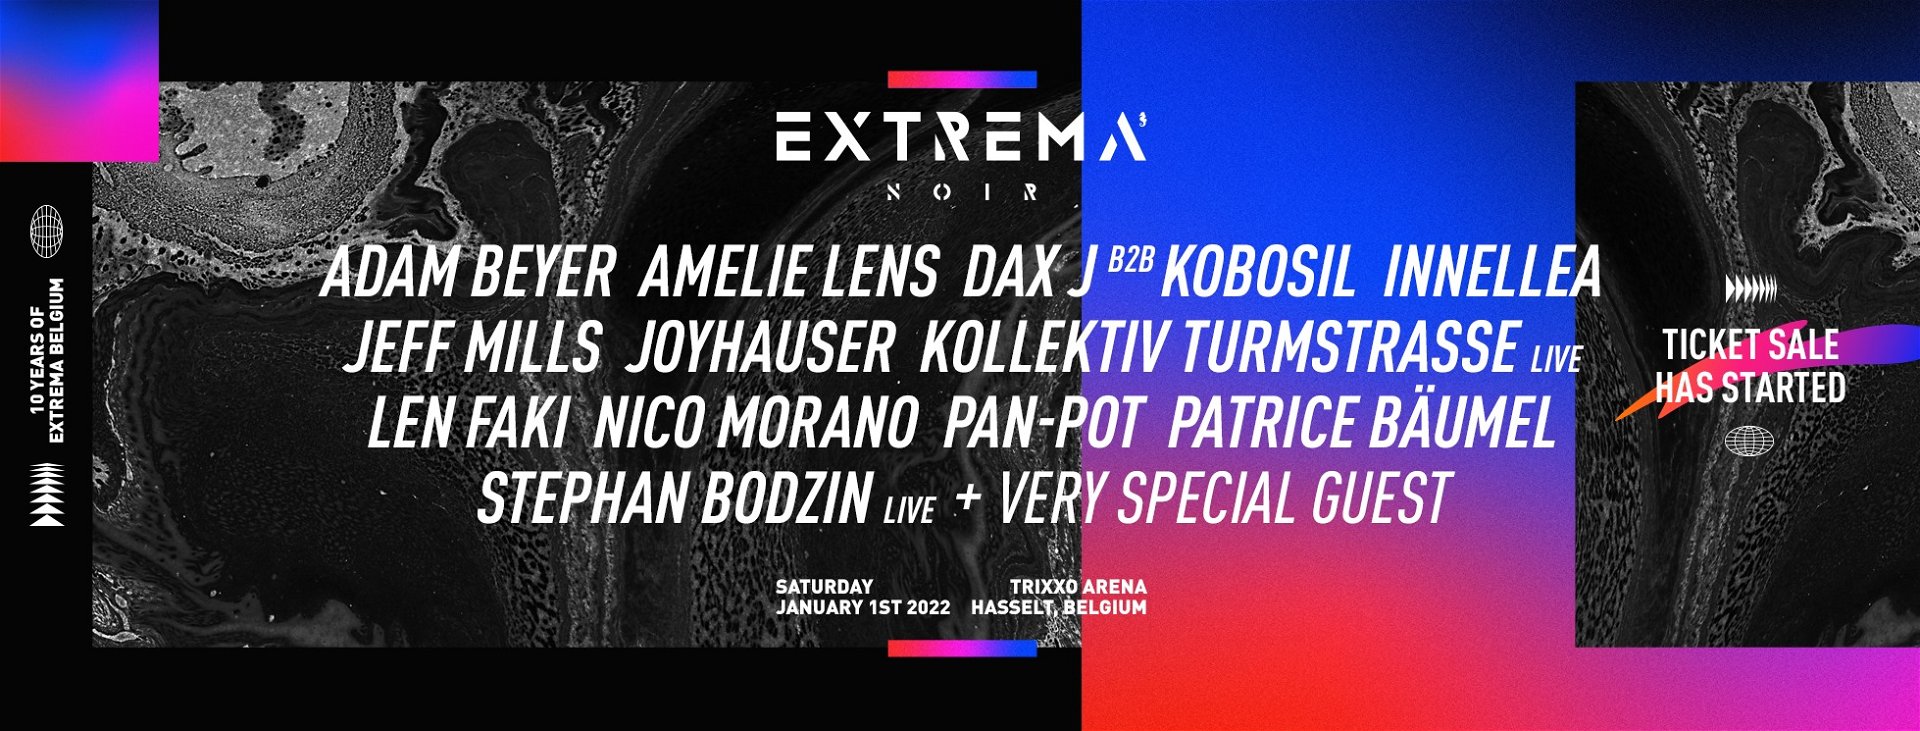 Extrema Noir lineup